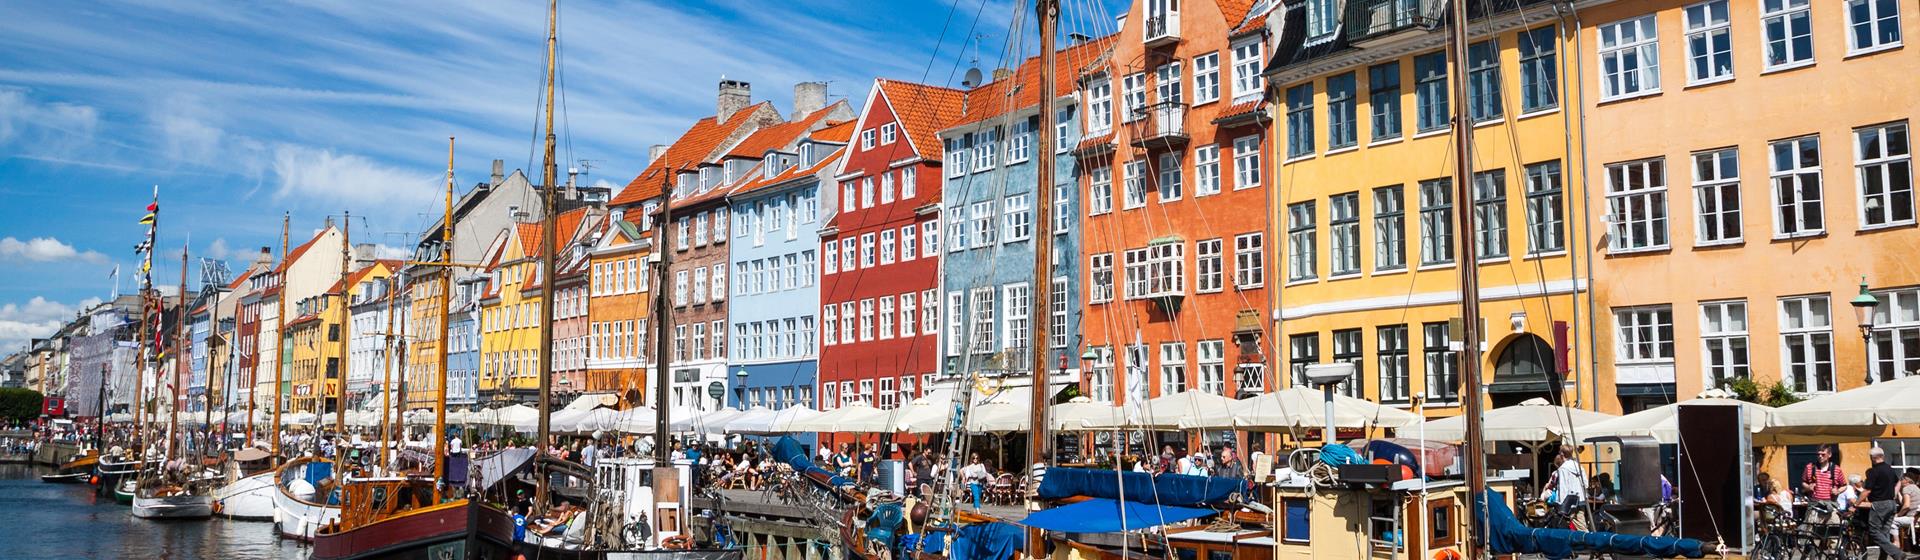 Holidays & City Breaks to Copenhagen